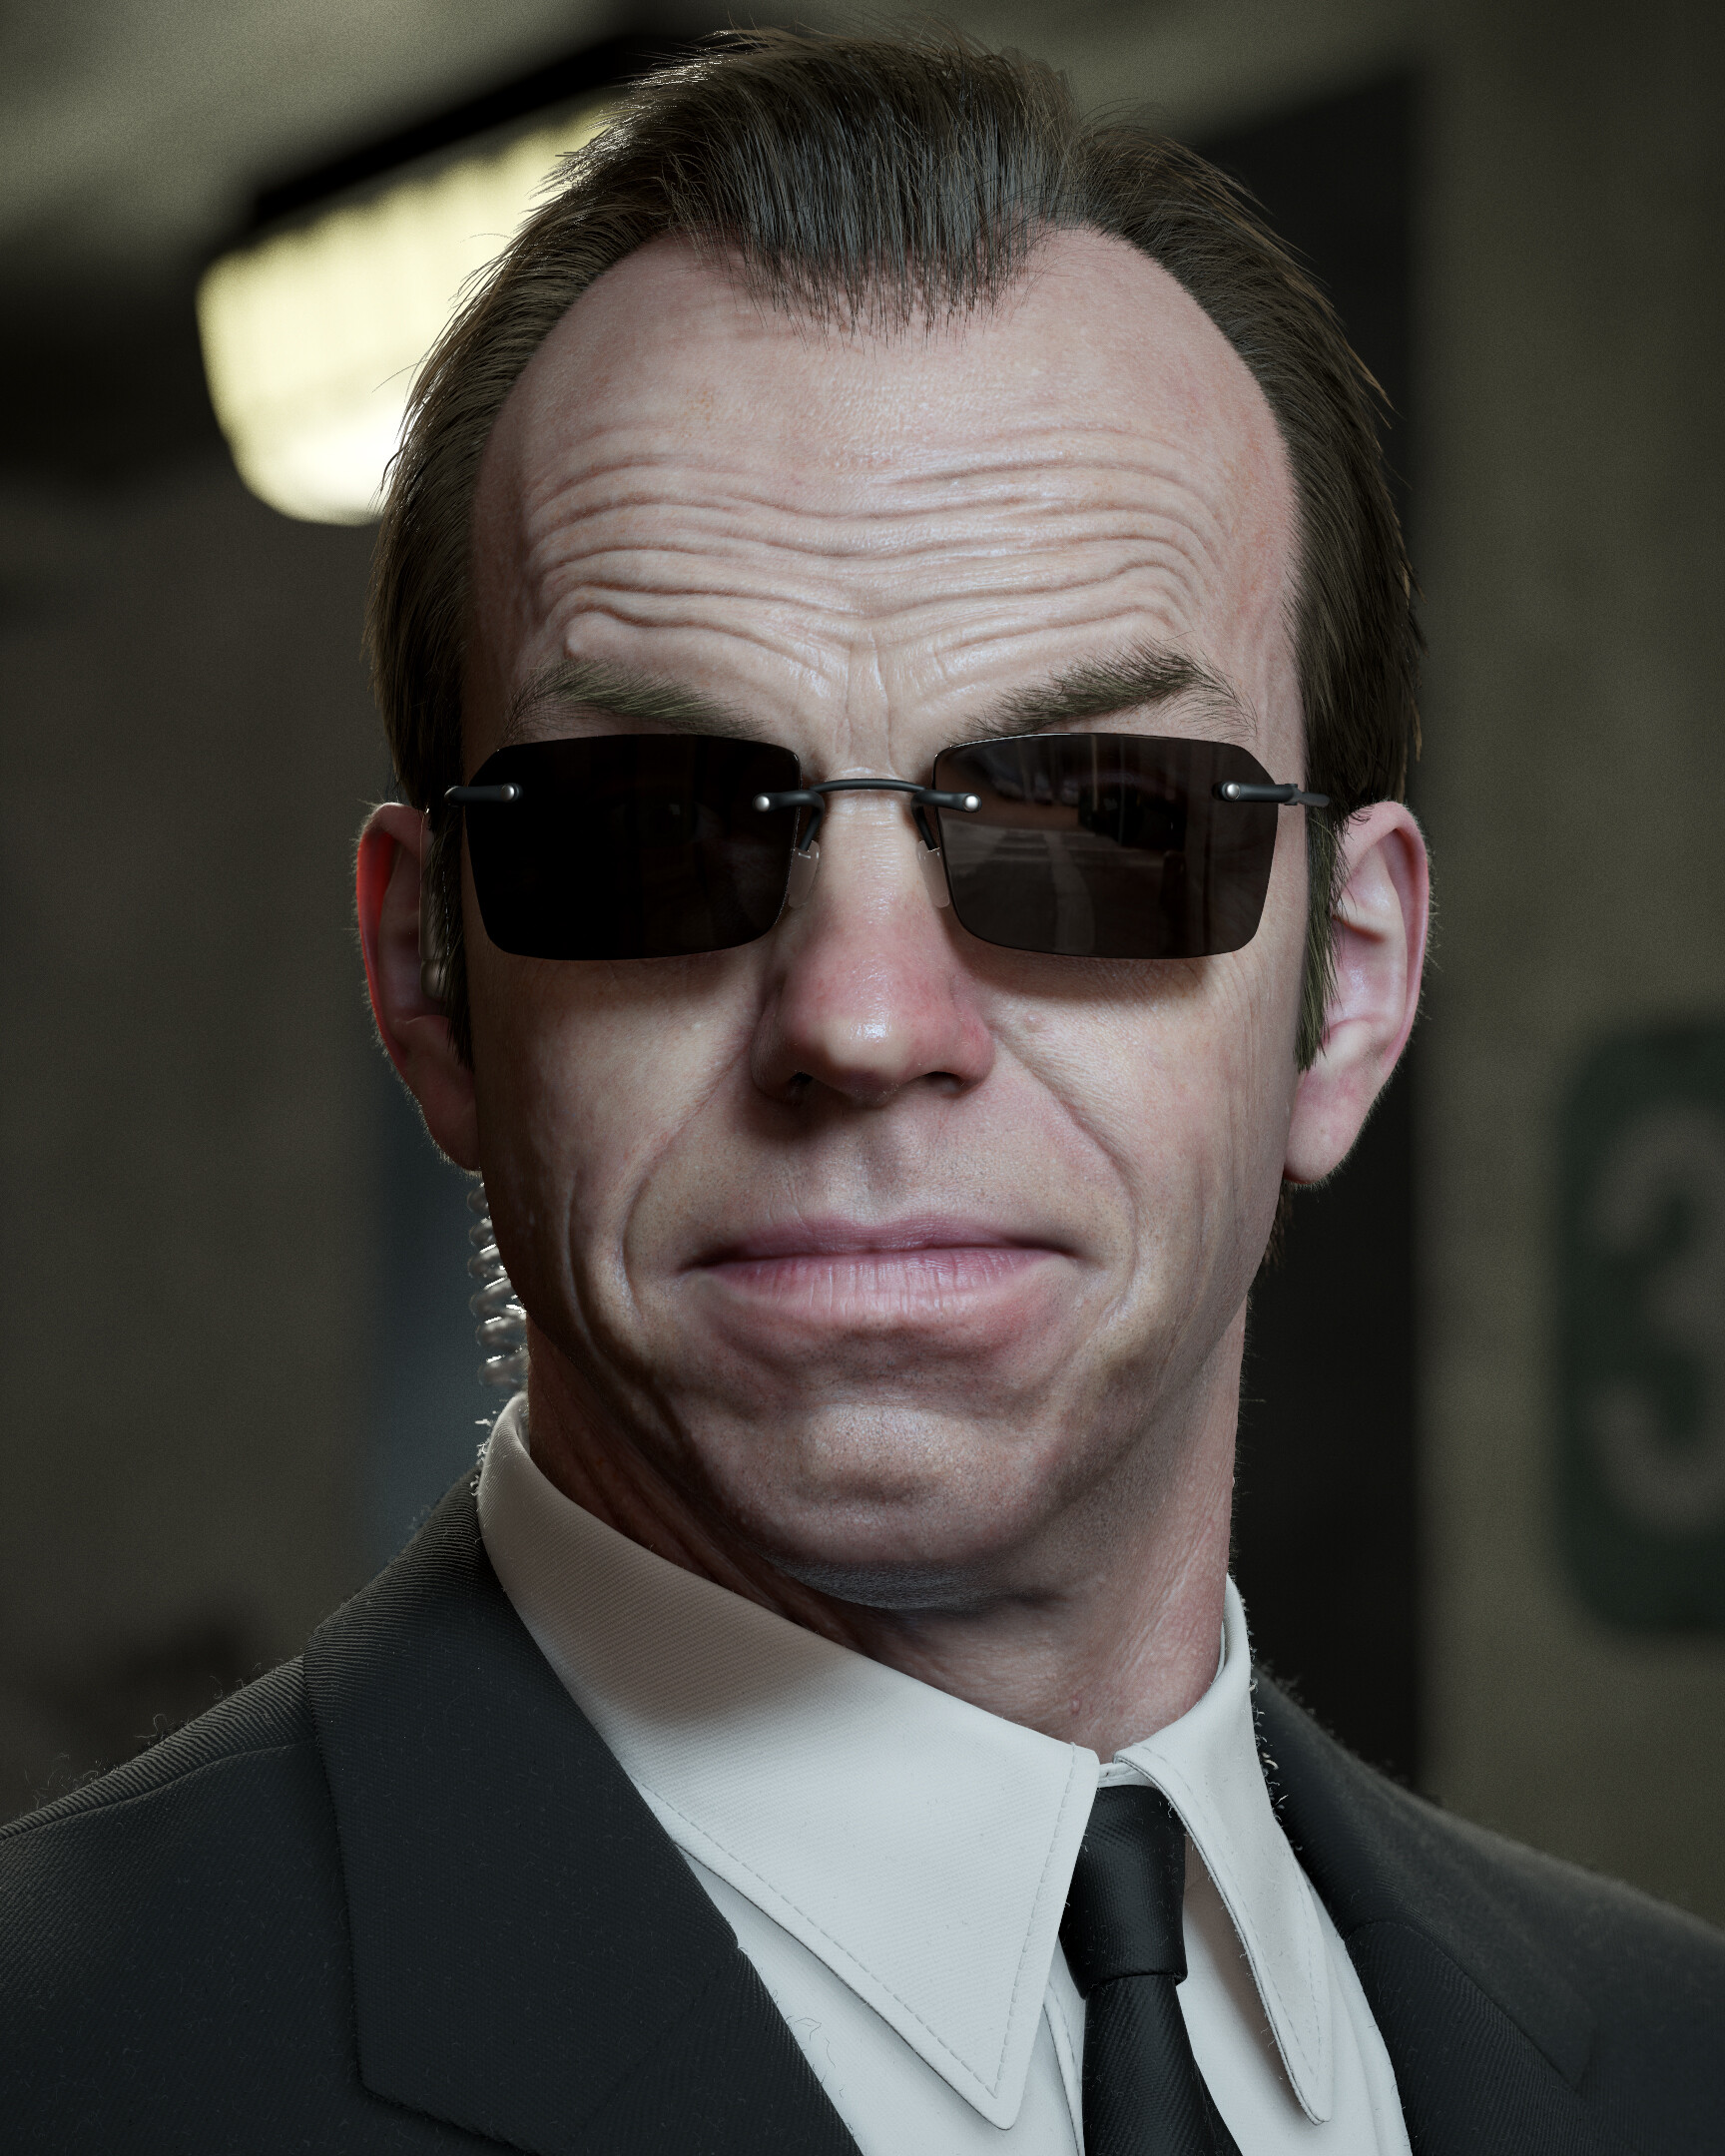 Neo Agent Smith | tunersread.com